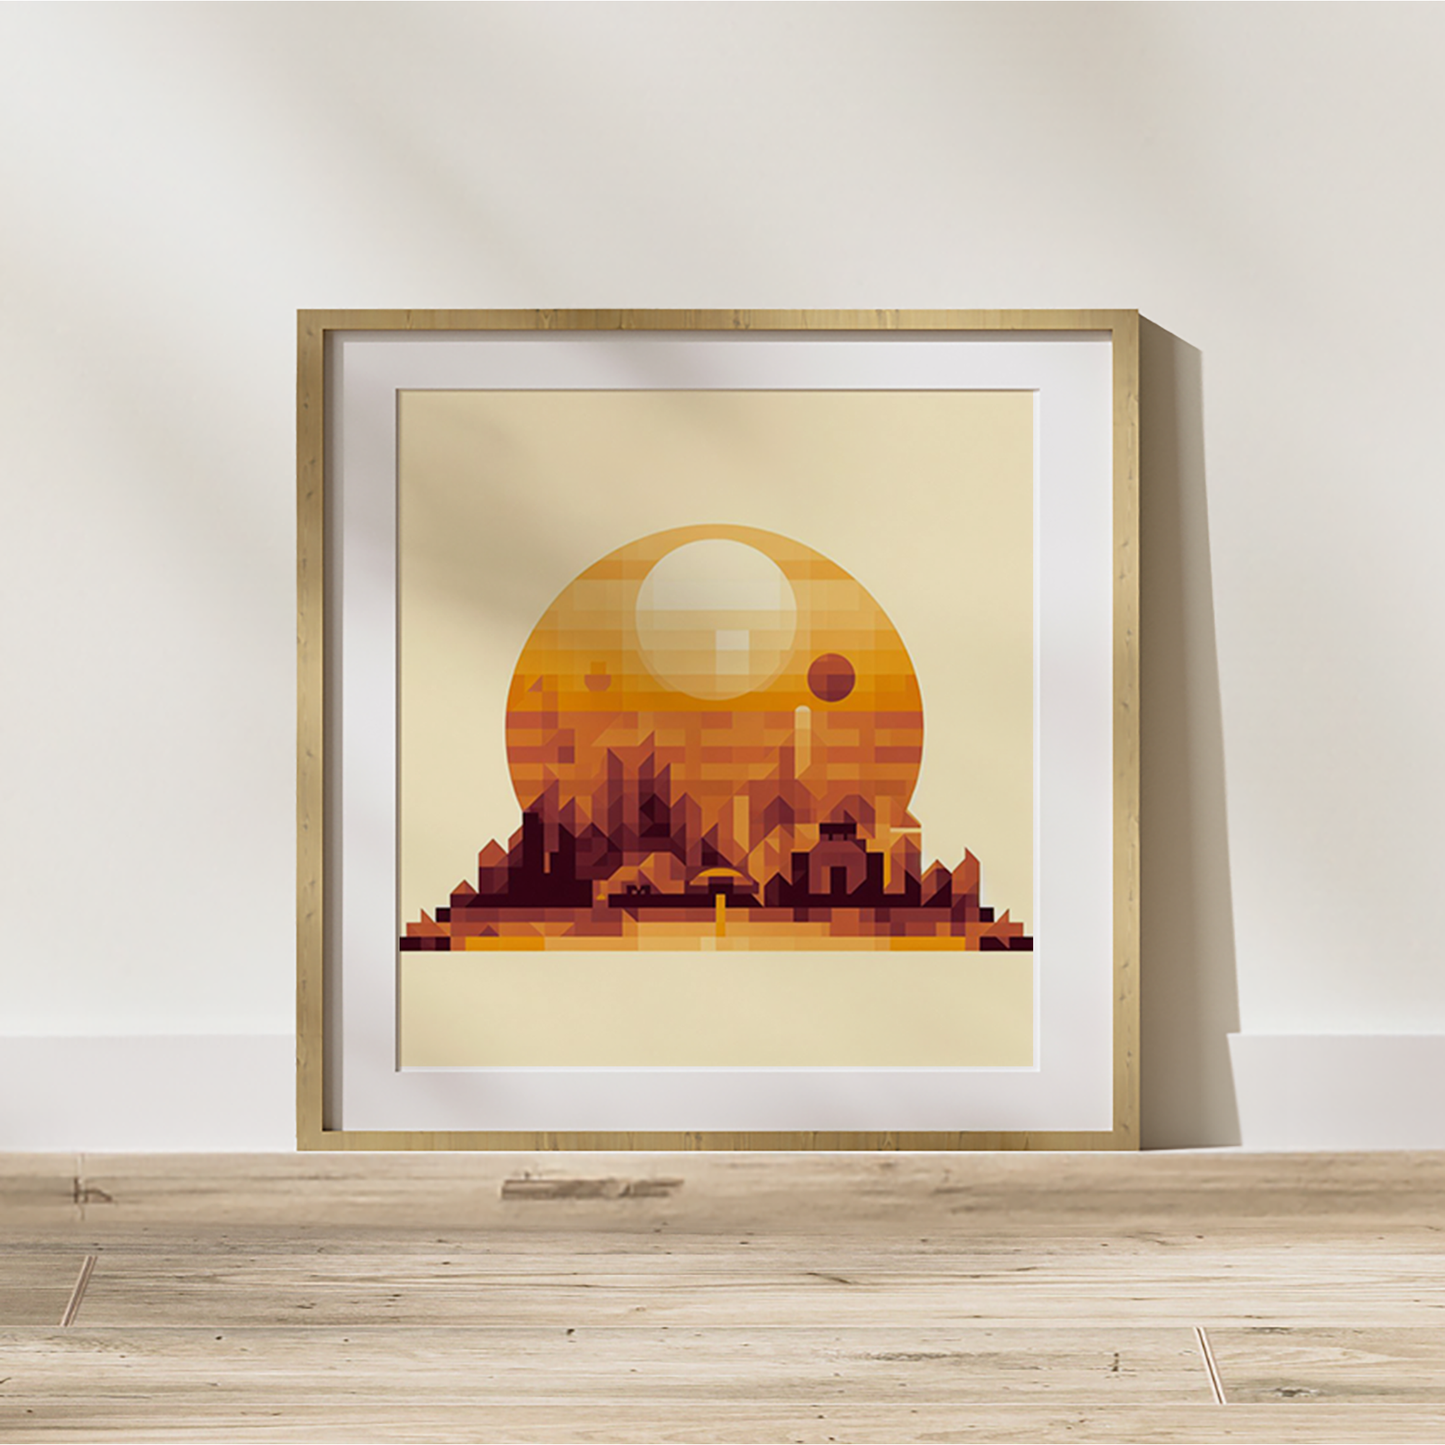 Star Wars Tatooine Inspired Print